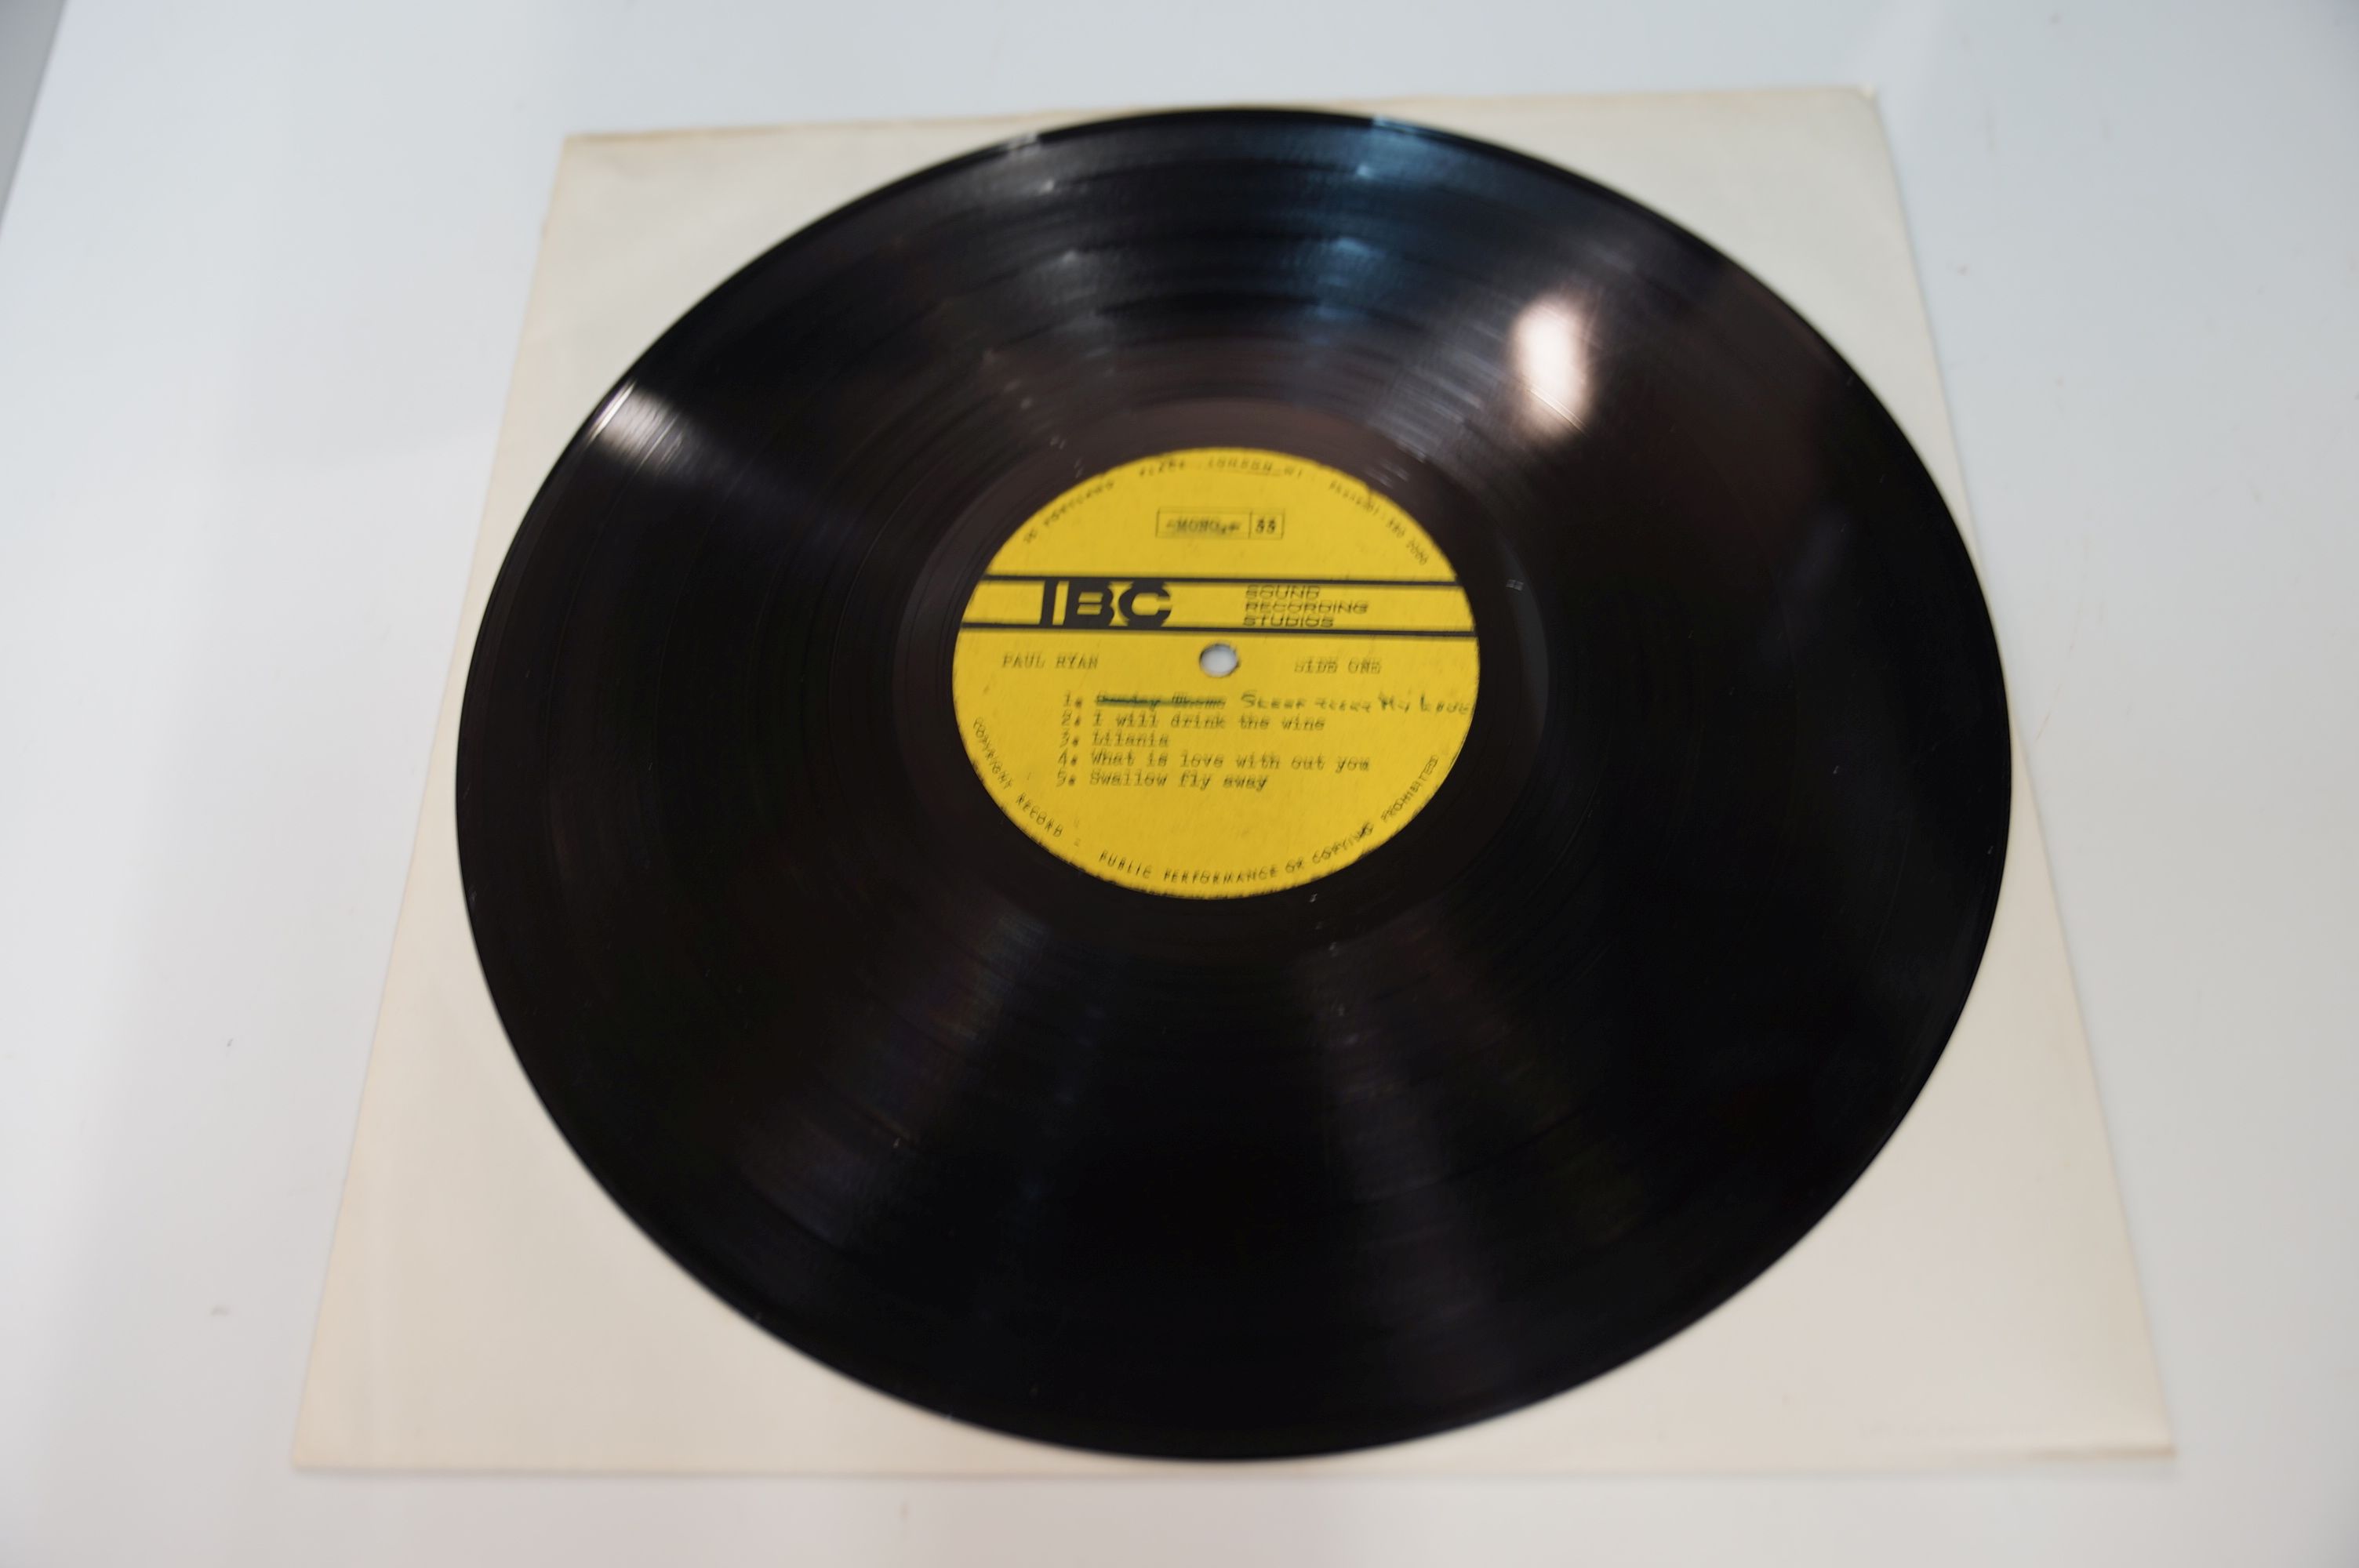 VINYL - PAUL RYAN - AMAZING UNIQUE UNRELEASED 1969 ALBUM DOUBLE SIDED ACETATE. WOW, IT DOES NOT - Image 5 of 5